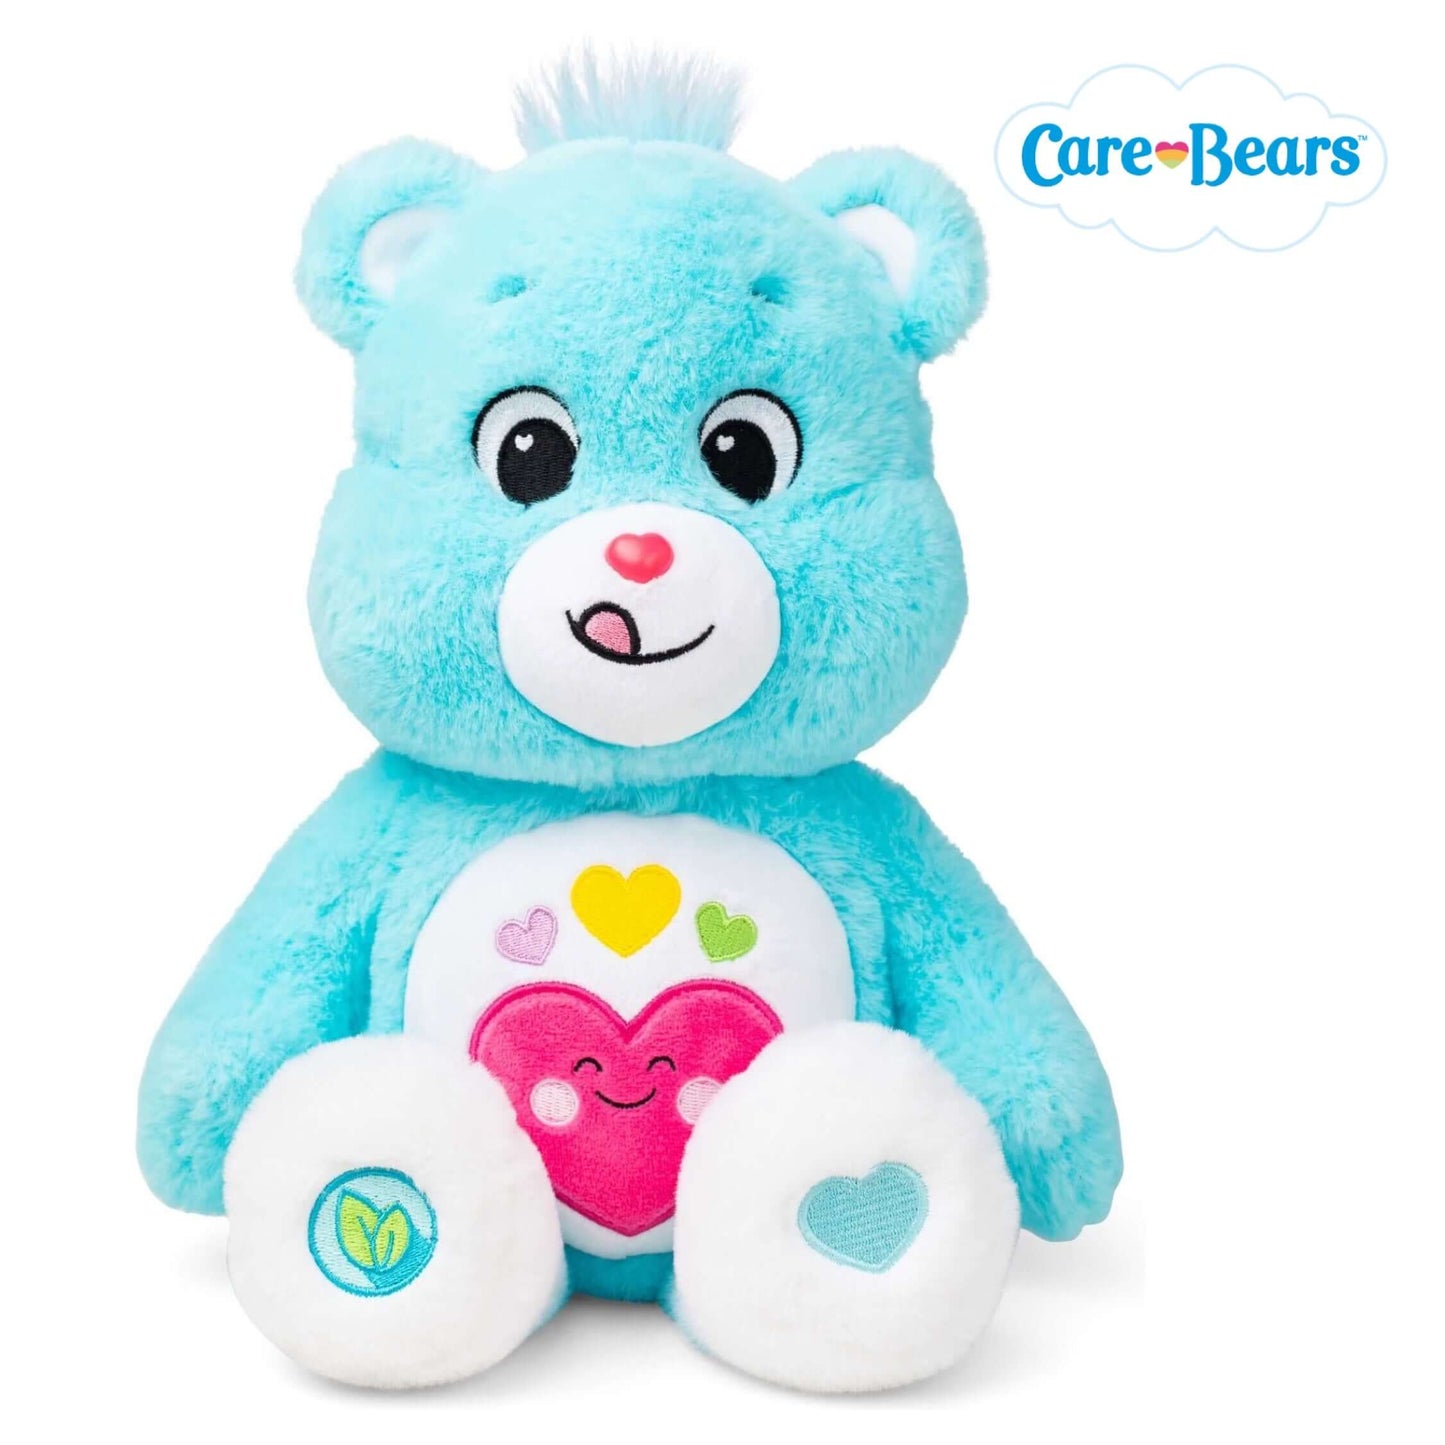 Care Bears Always Here Bear Plush